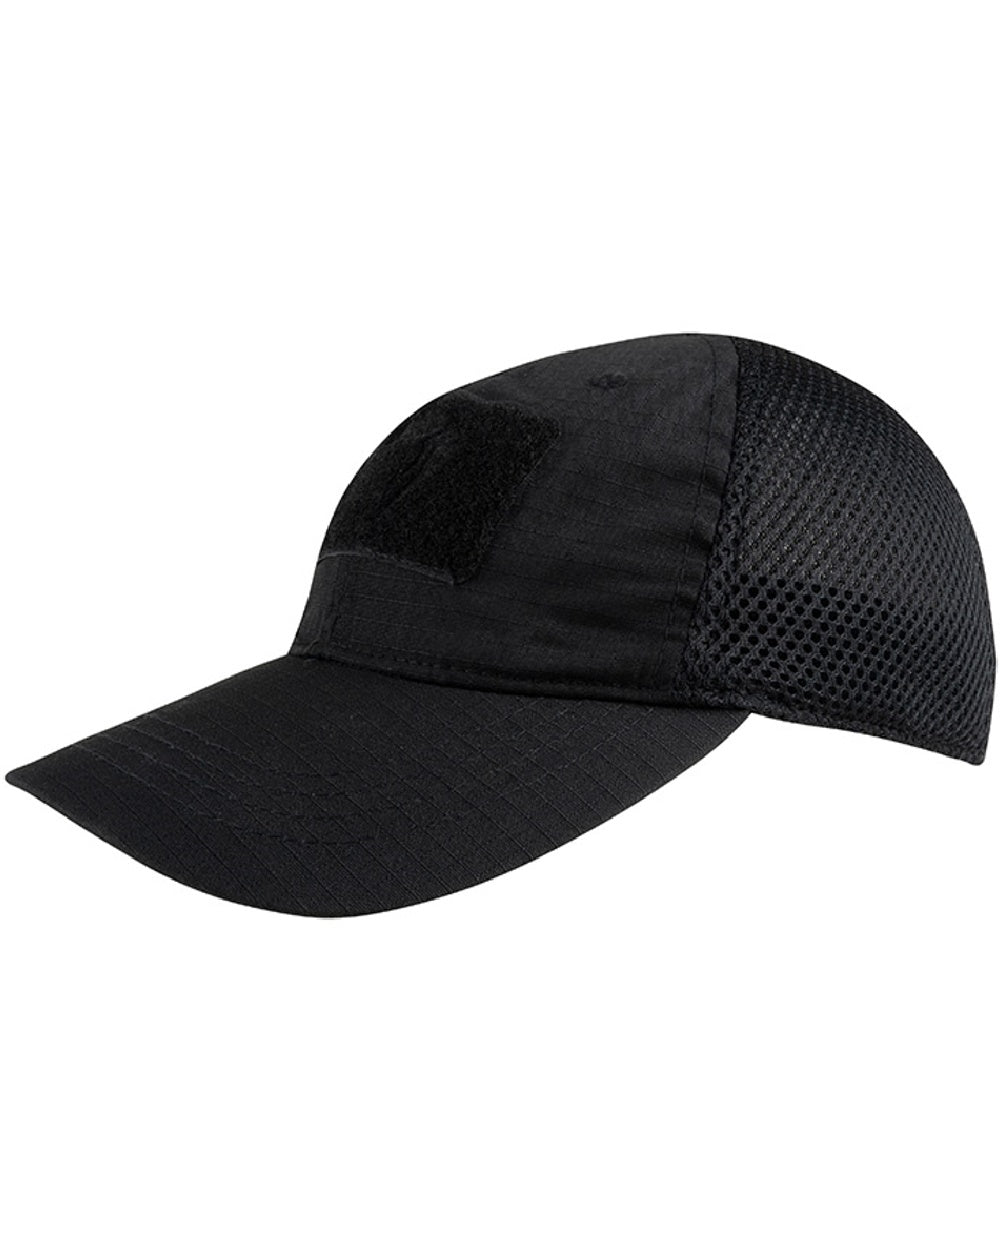 Viper Flexi-Fit Baseball Cap in Black 